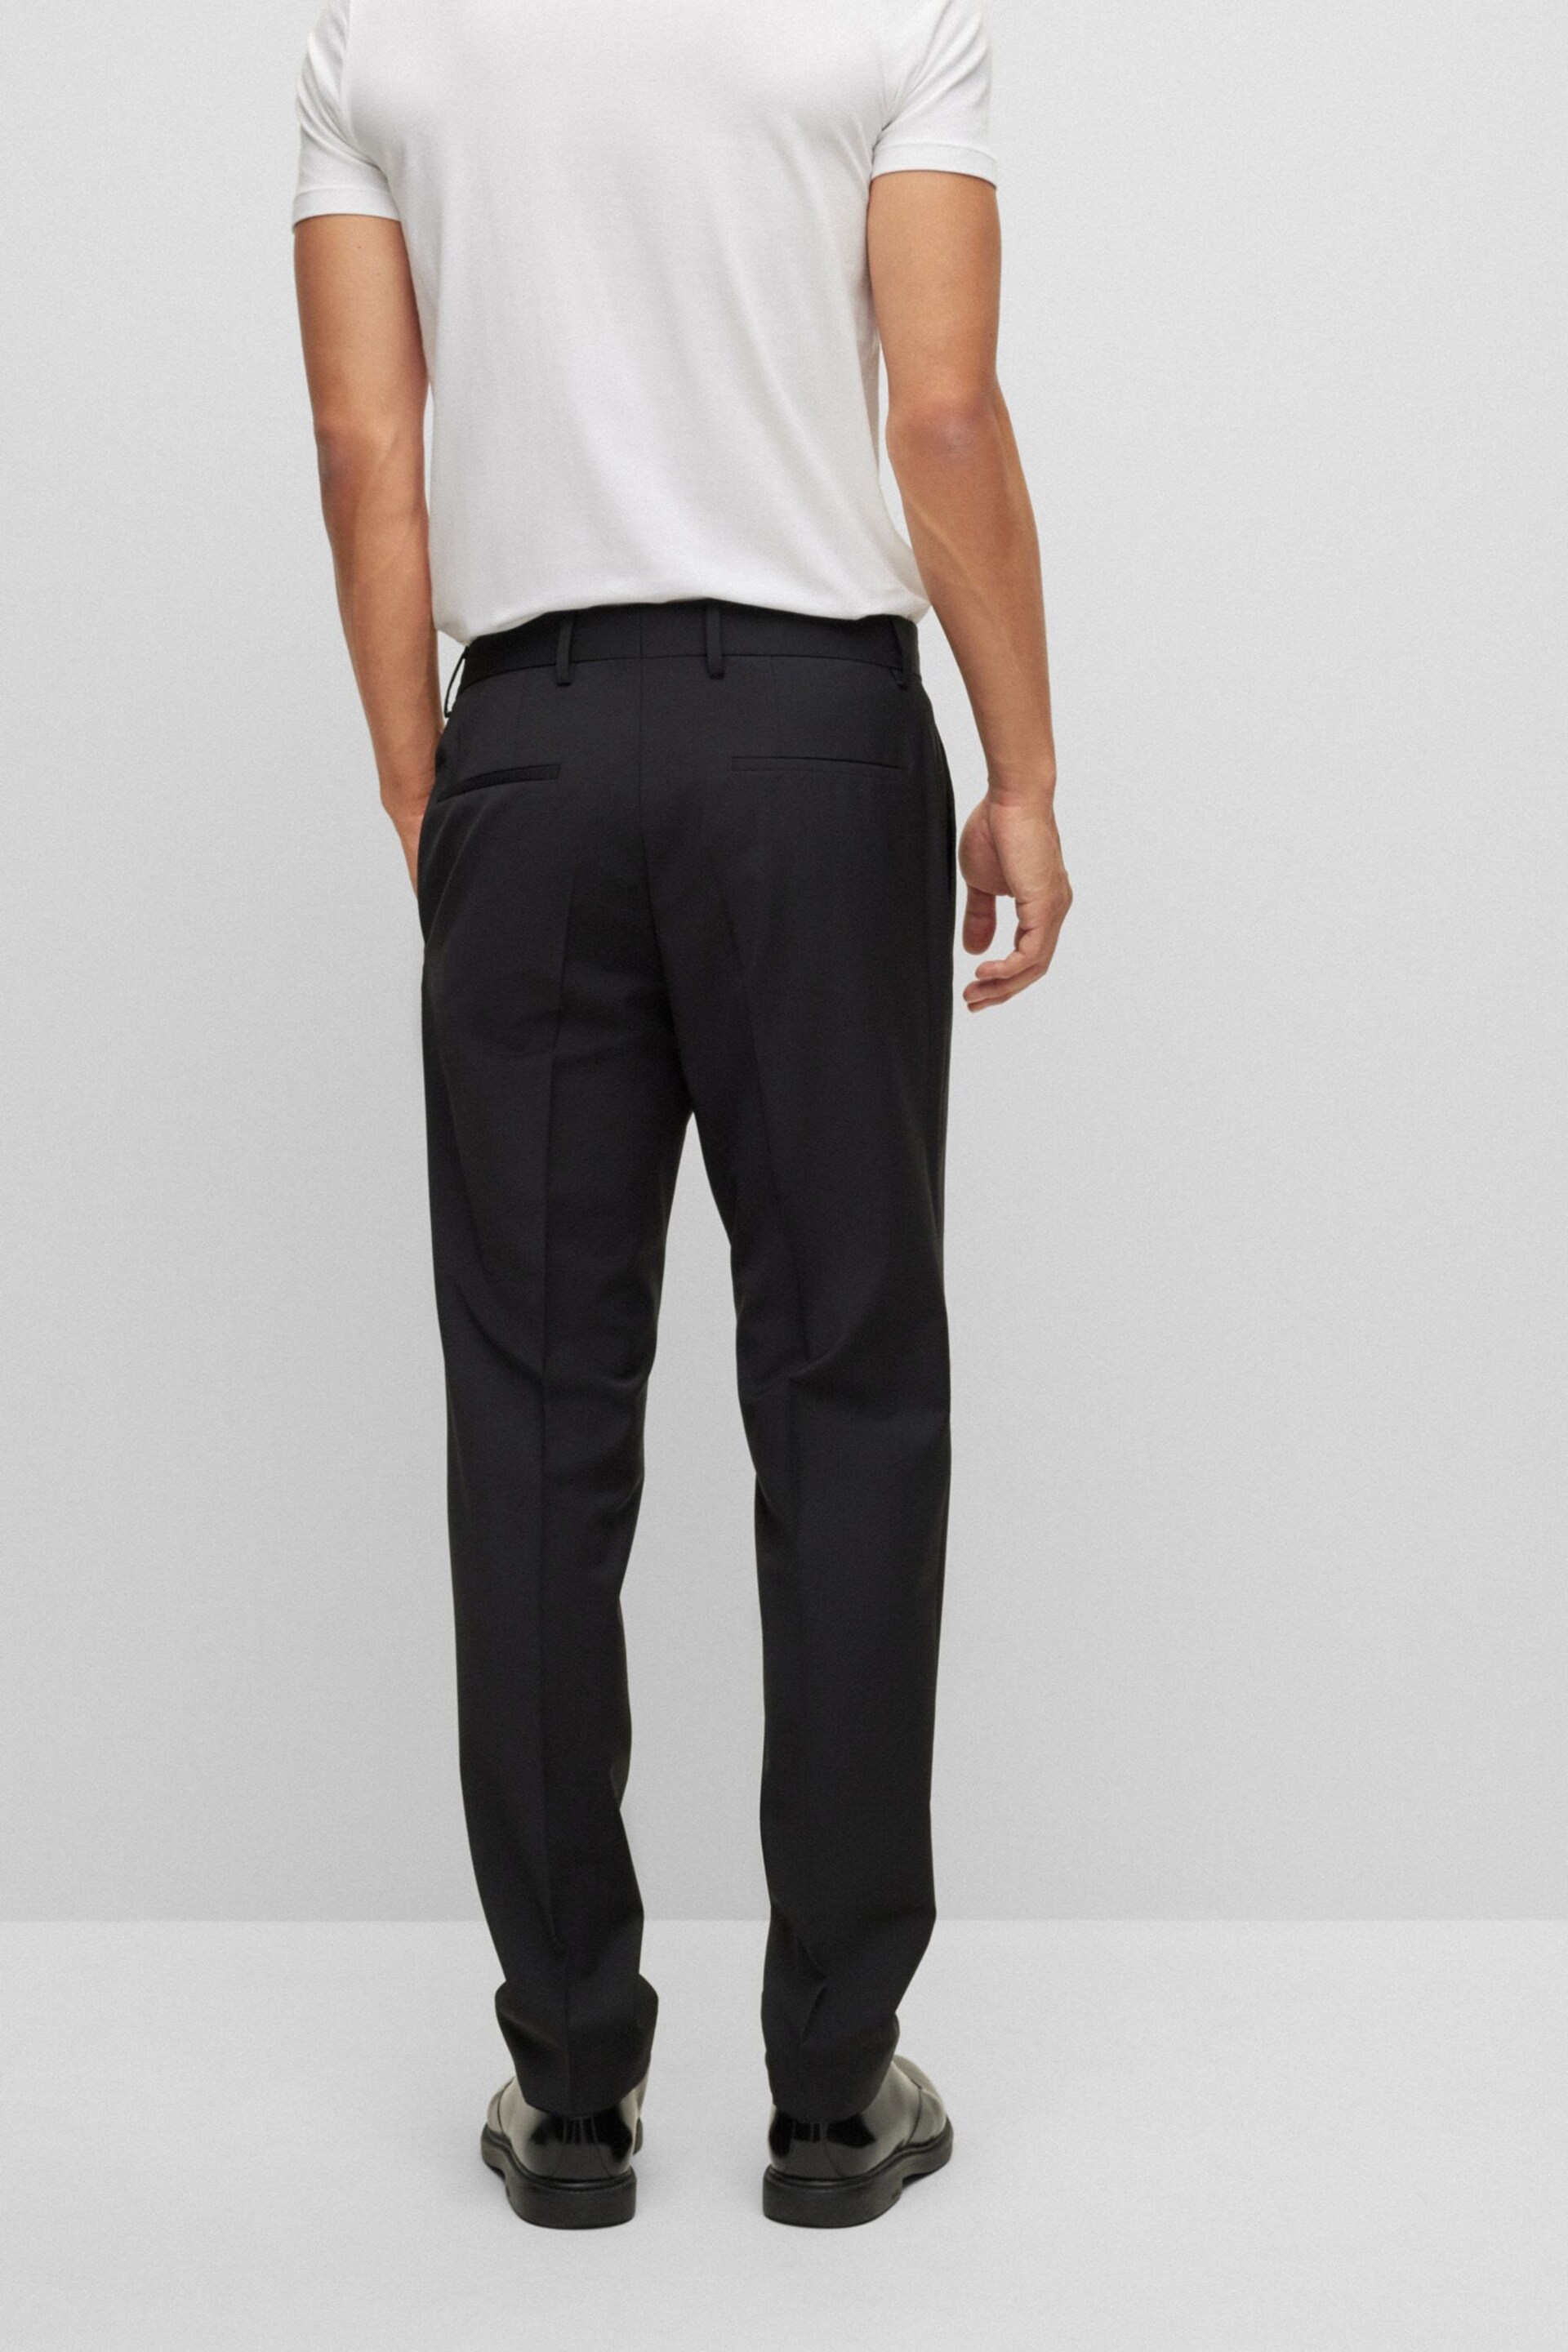 BOSS Black Slim Fit Suit :Trousers - Image 2 of 5